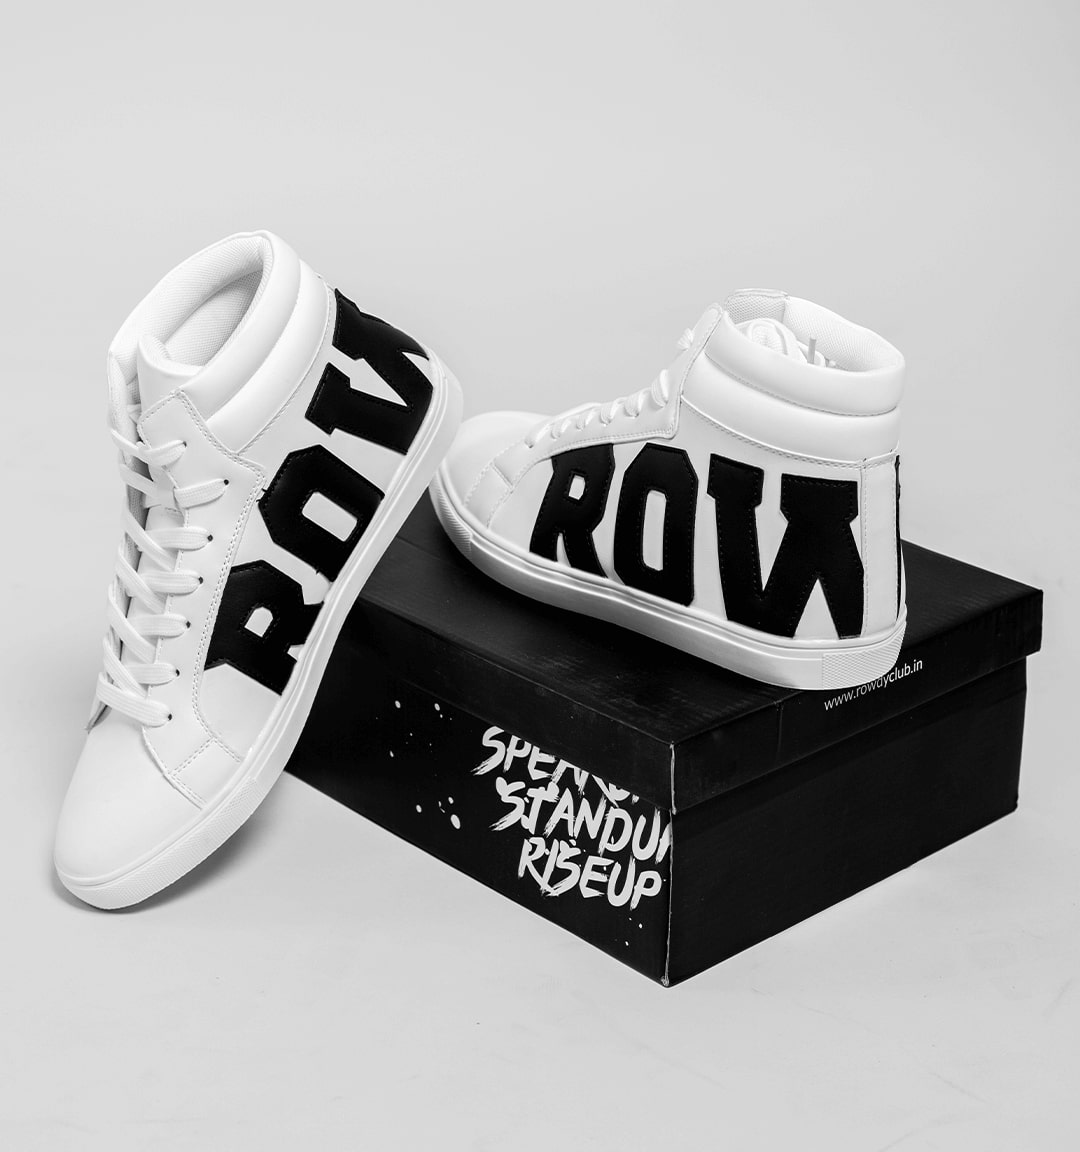 Rowdy Girl S High Rise Sneakers The Rowdy Club You Re The Fuckin Future